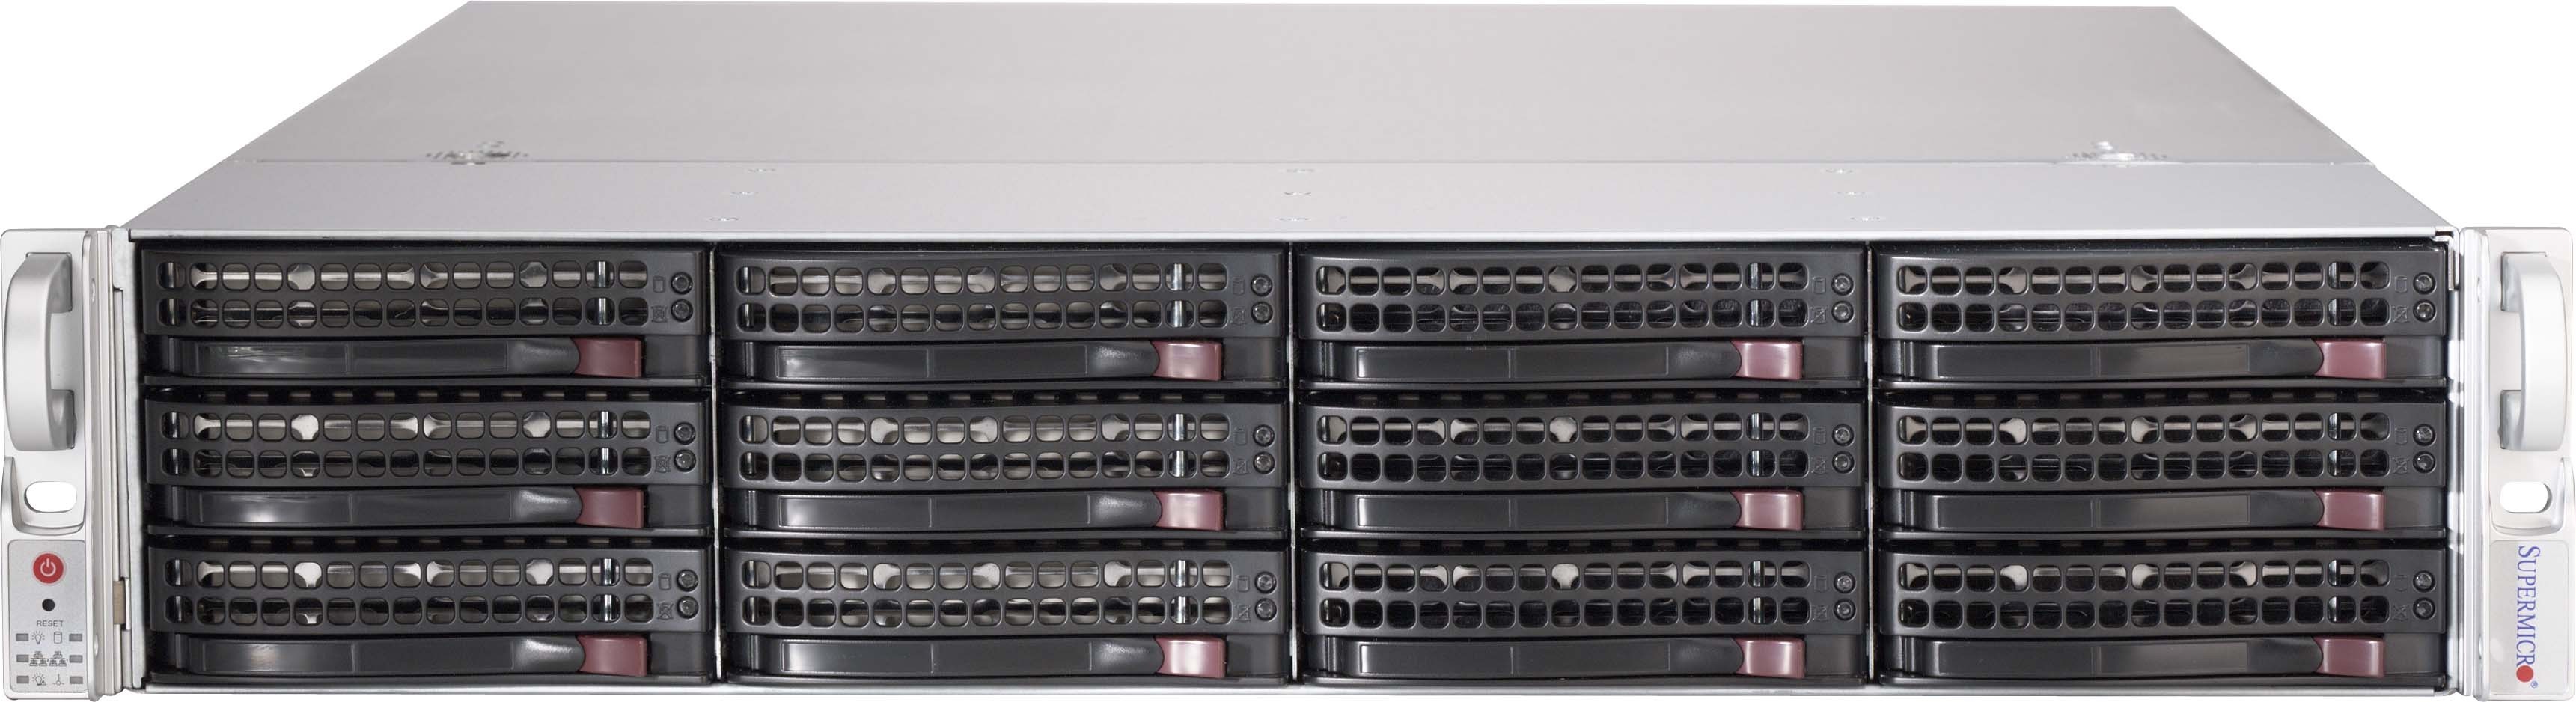 SuperMicro CSE-826 (X9DRi-LN4F+ Rev1.20) 12x LFF Hot-Swap SAS 2U Barebones Server